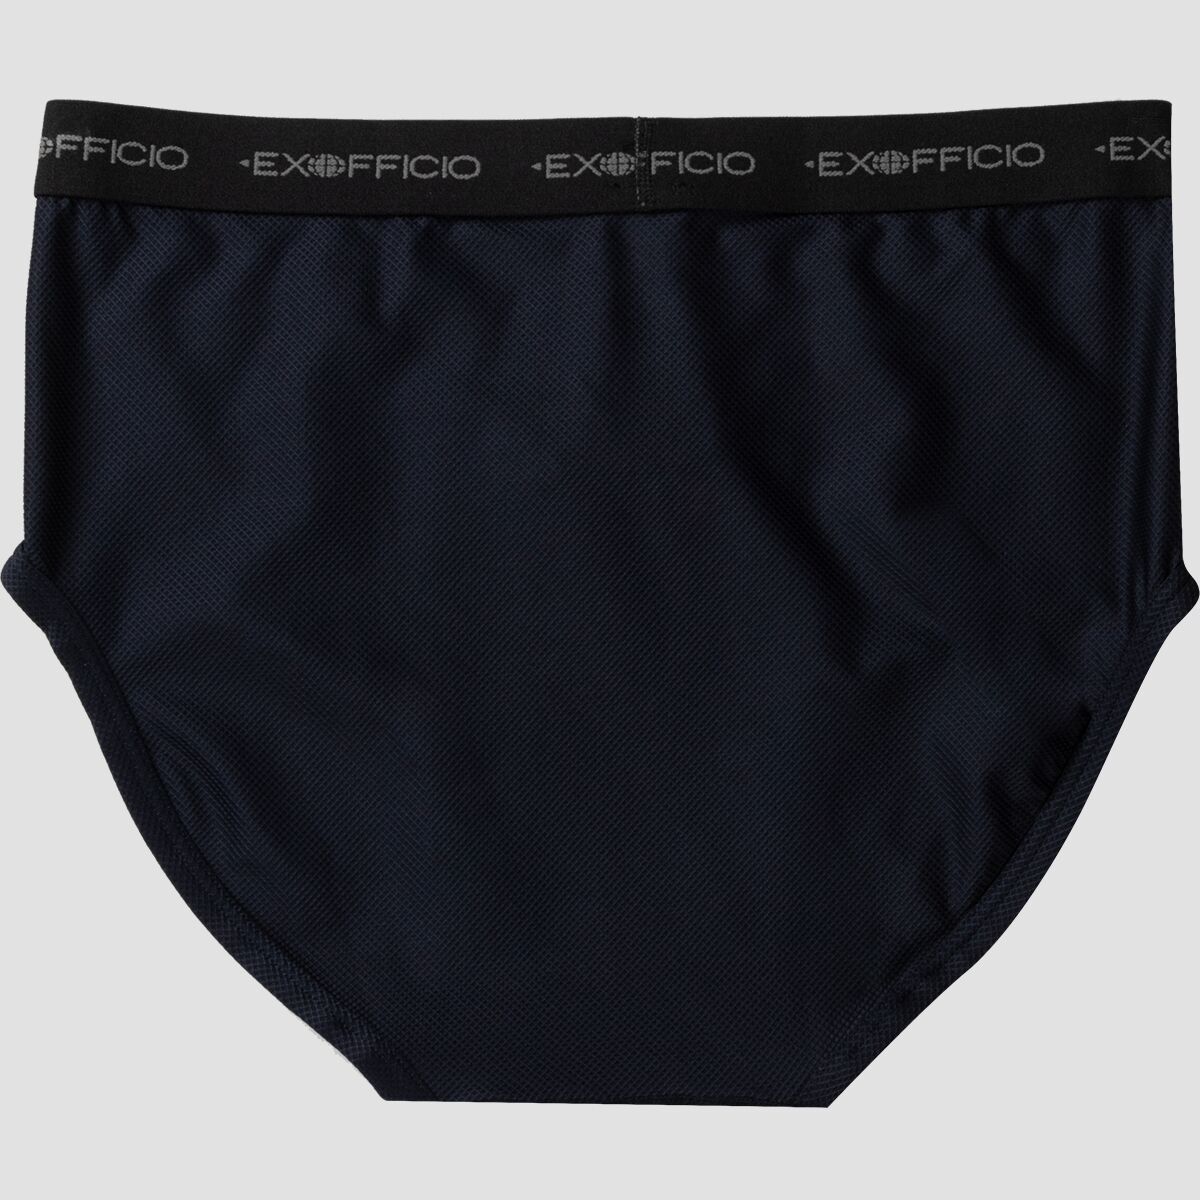 ExOfficio Give-N-Go Brief - Men's - Clothing